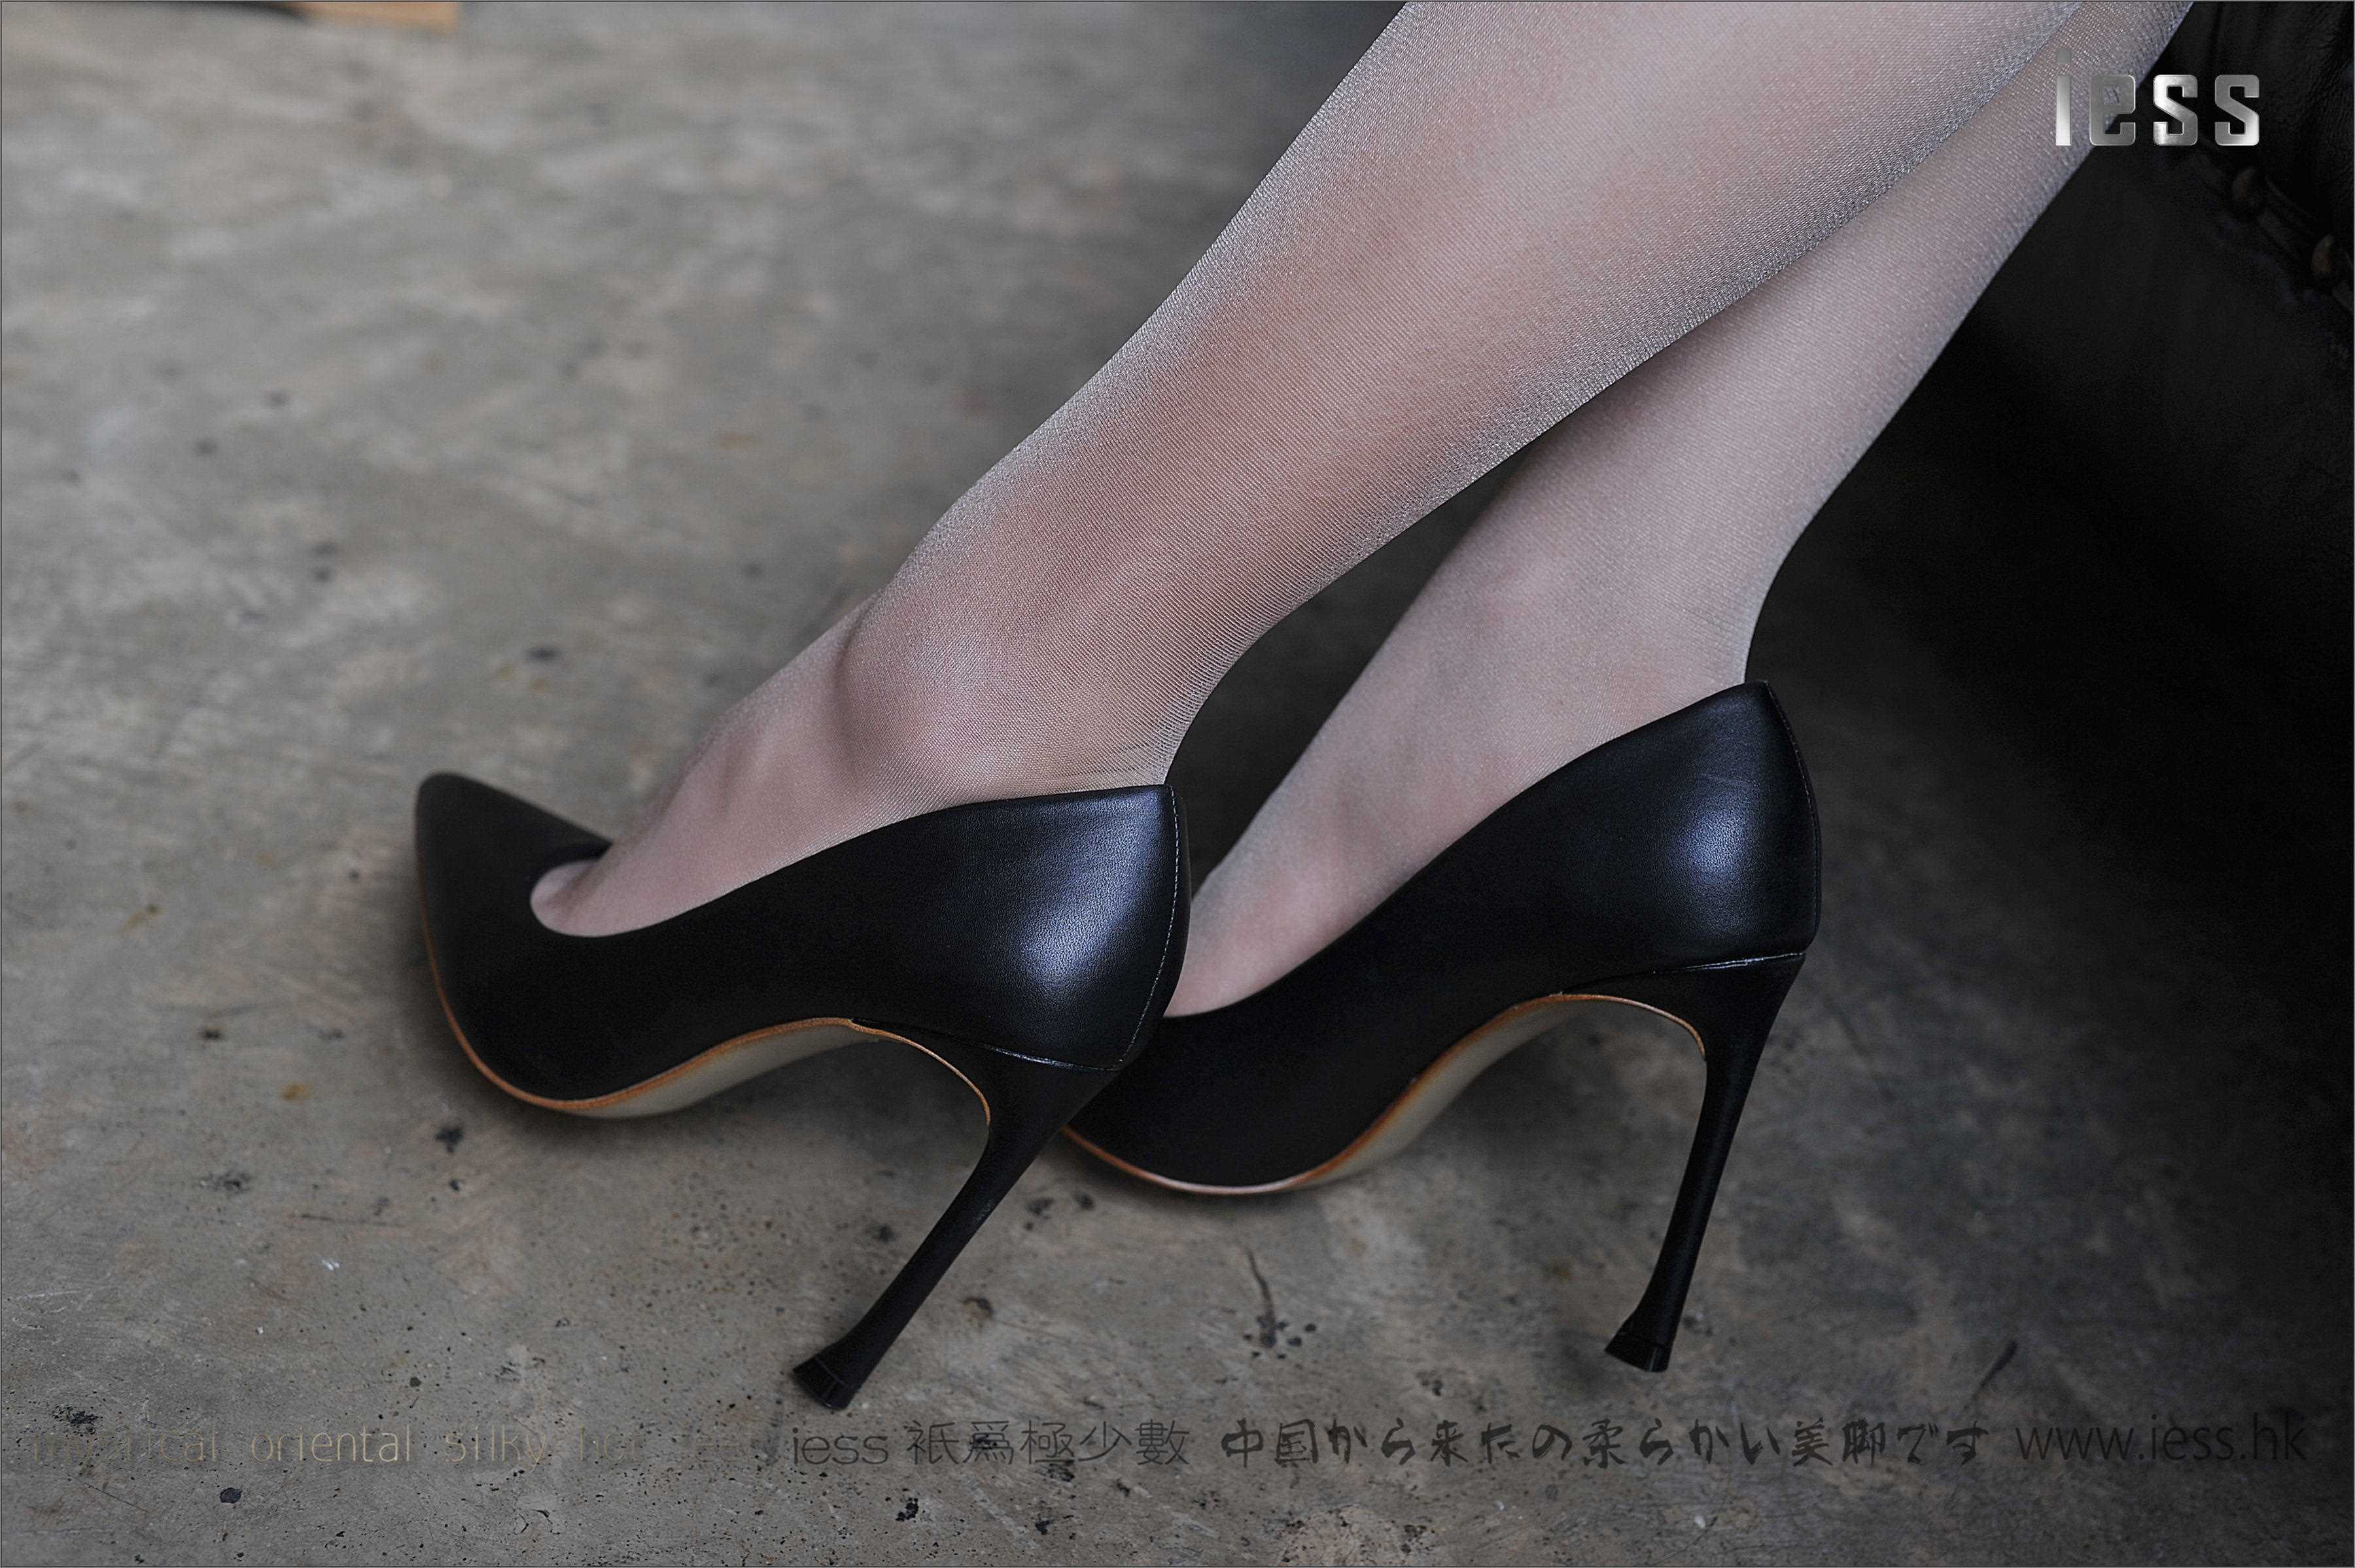 China Beauty Legs and feet 145